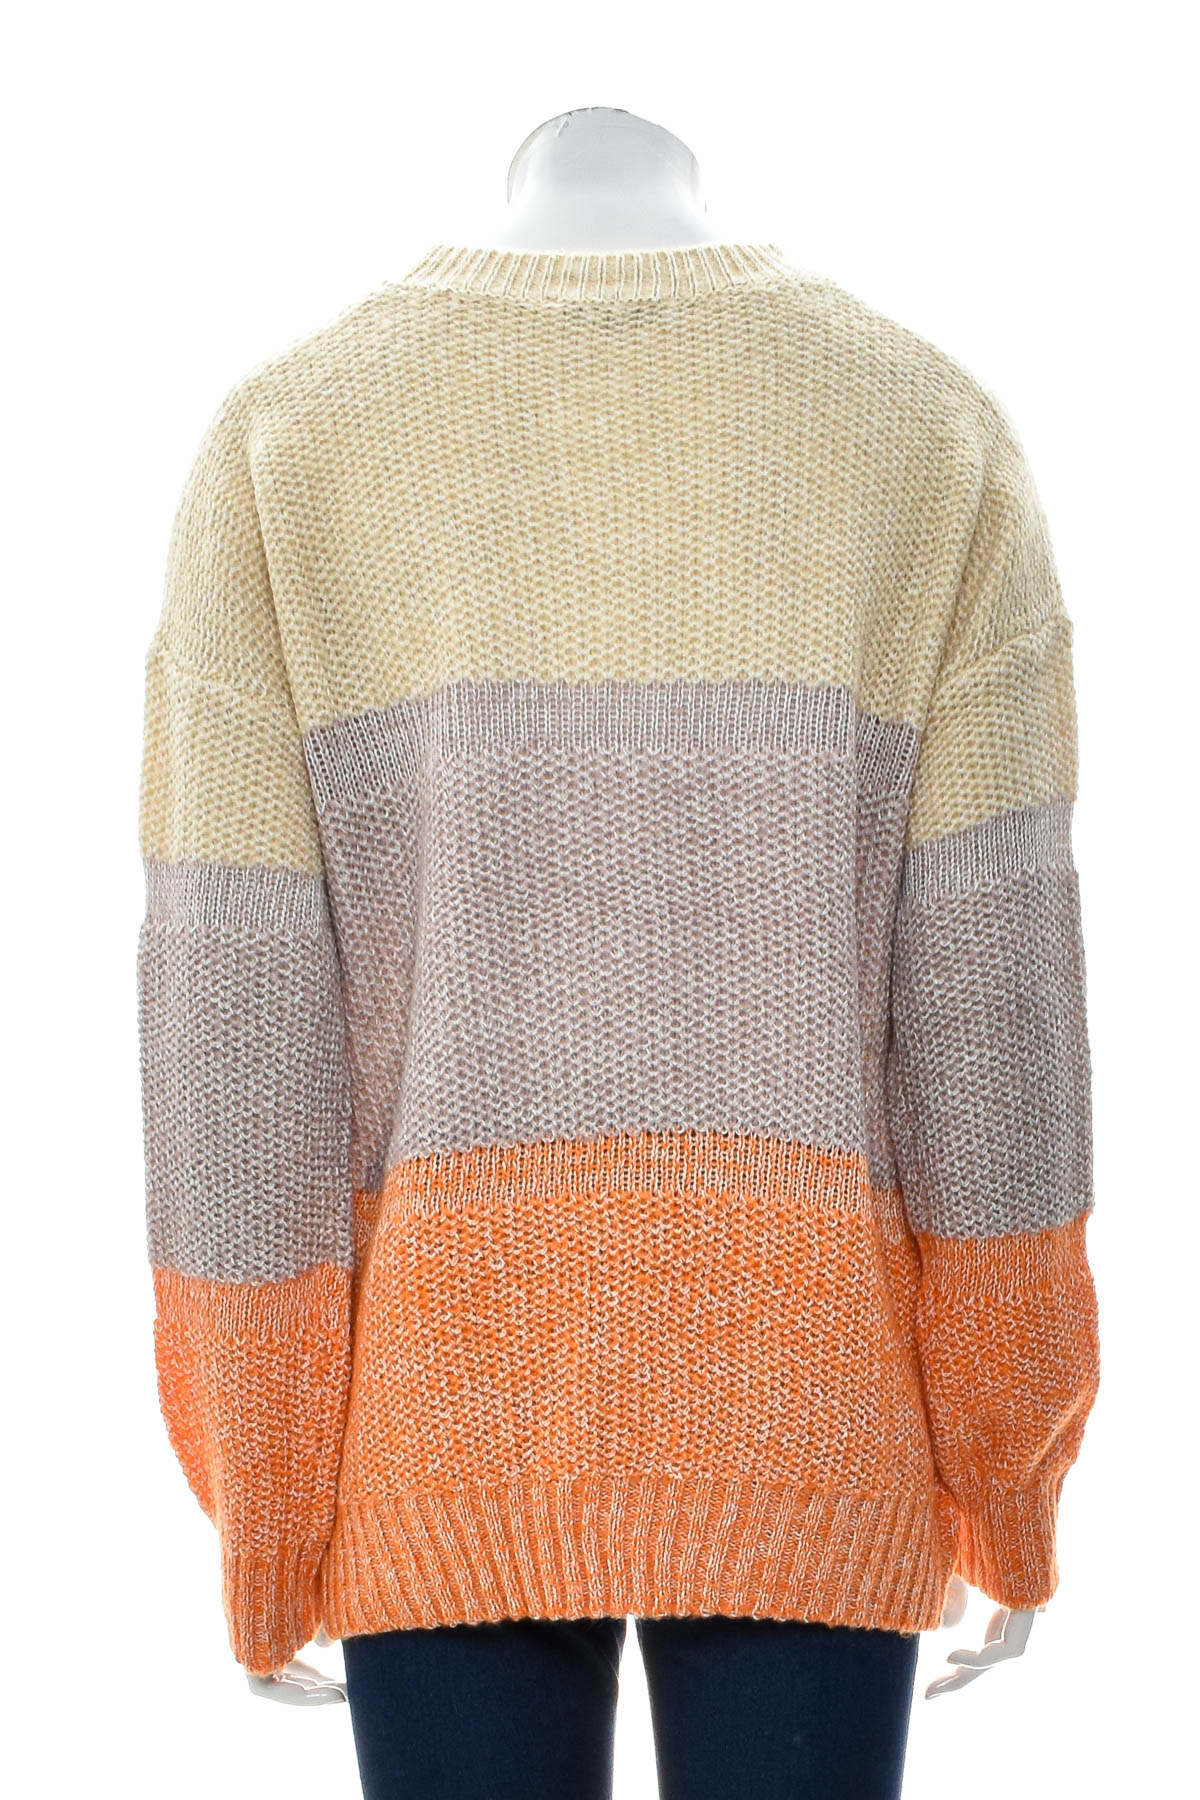 Women's sweater - Yidarton - 1